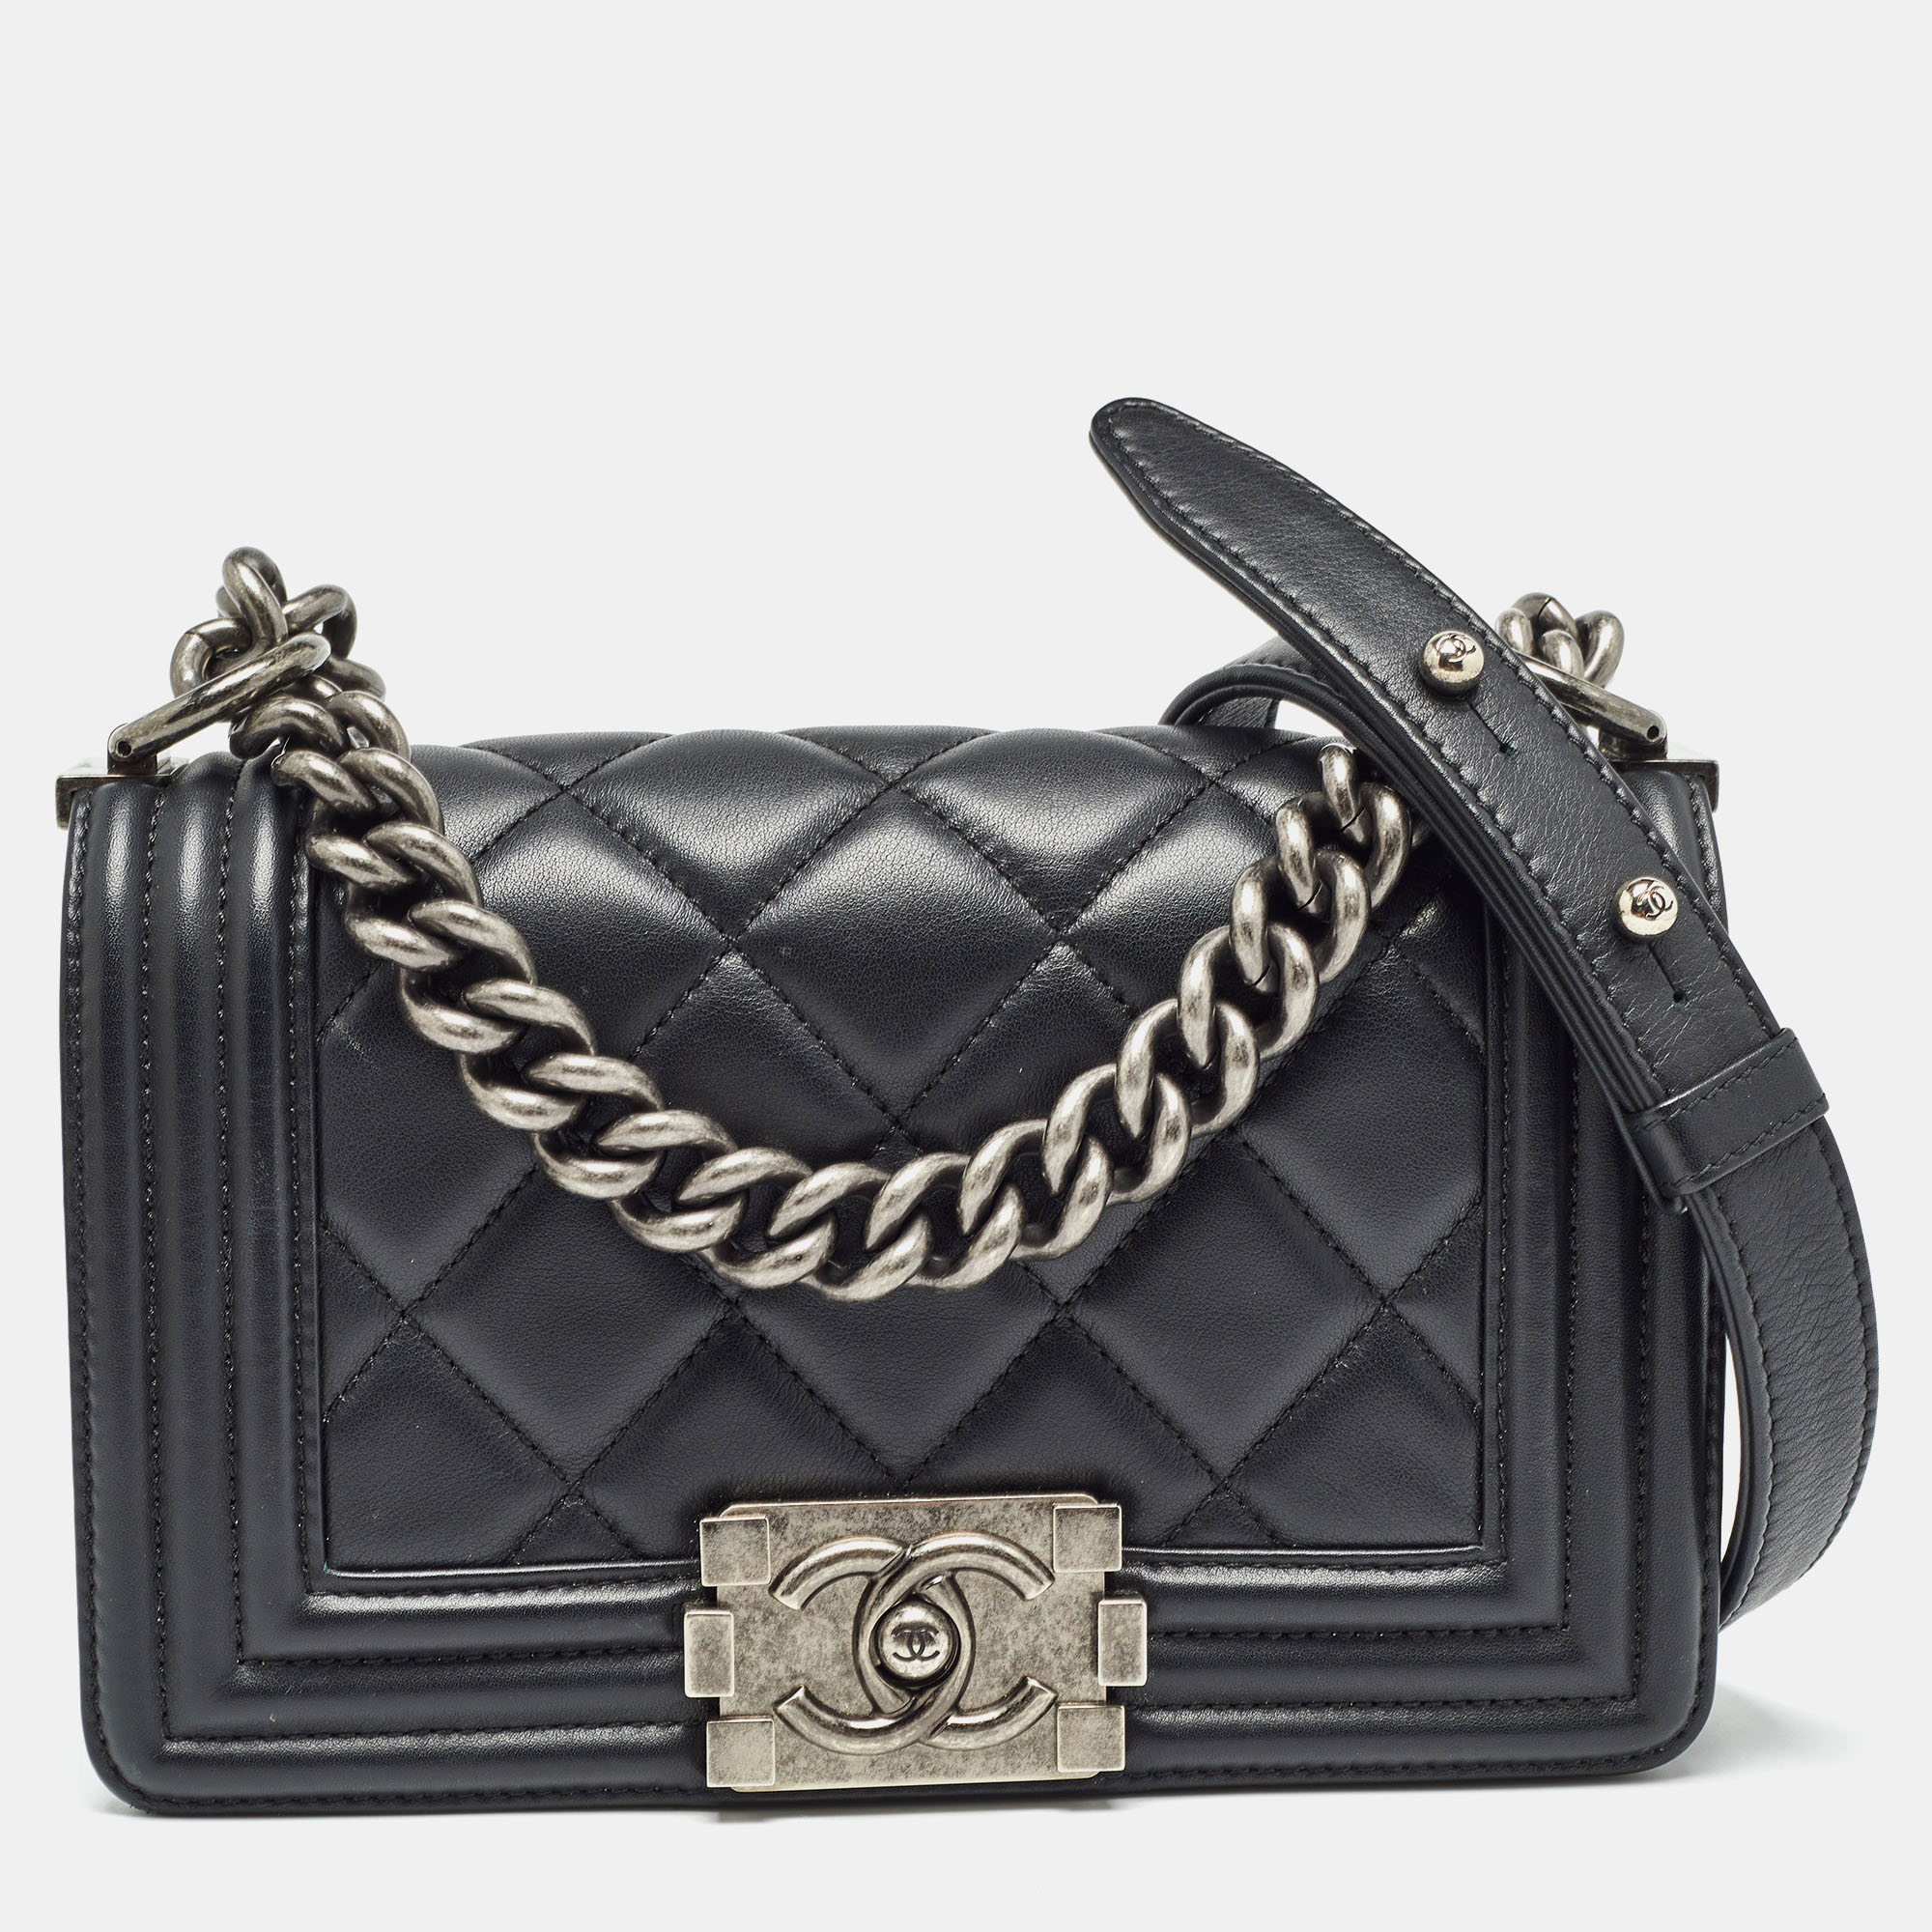 Chanel black qiulted leather mini boy bag